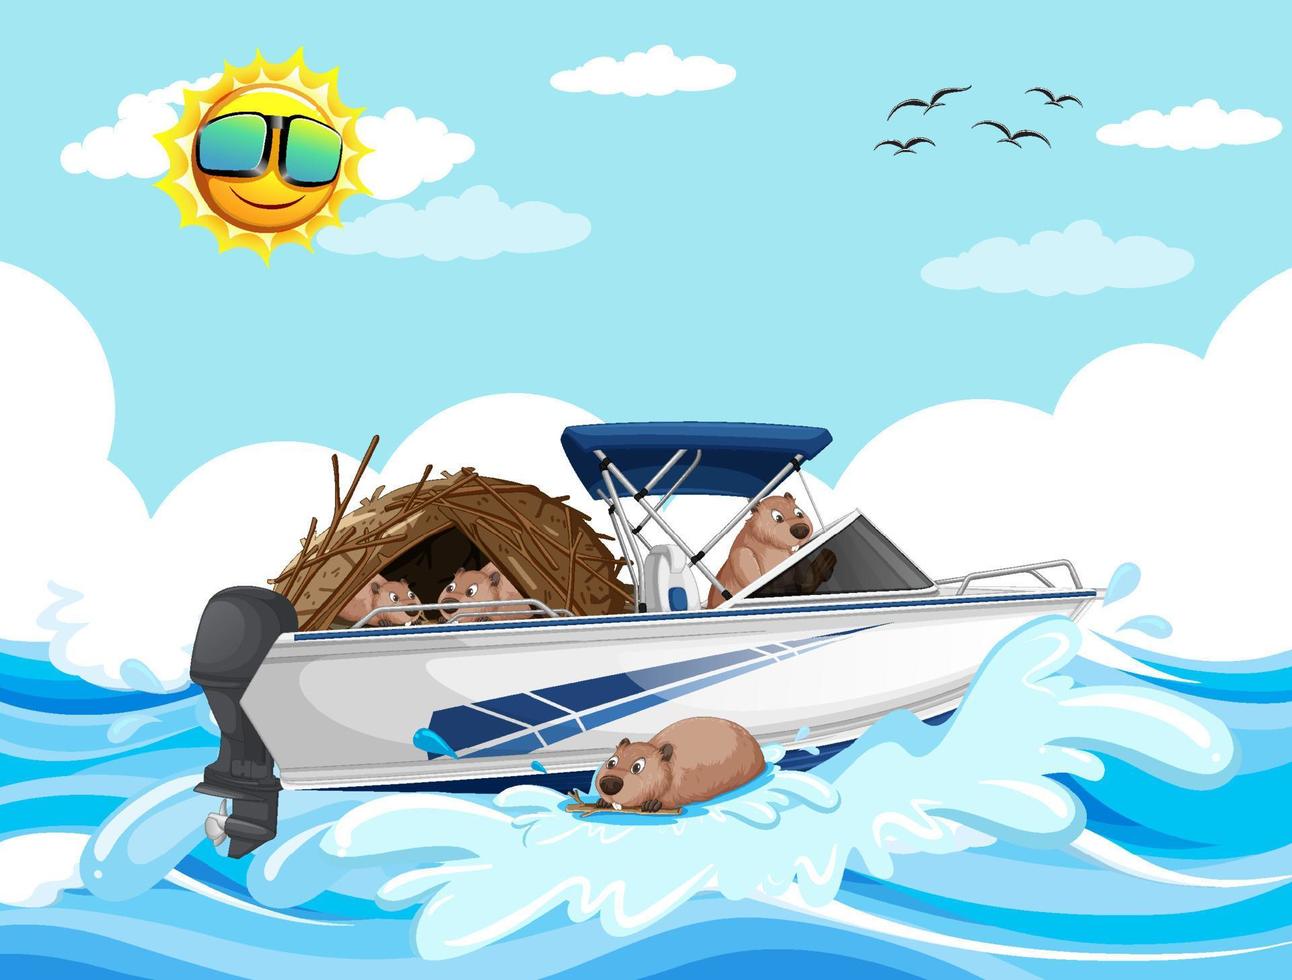 Ocean scene with group of beavers on speedboat vector